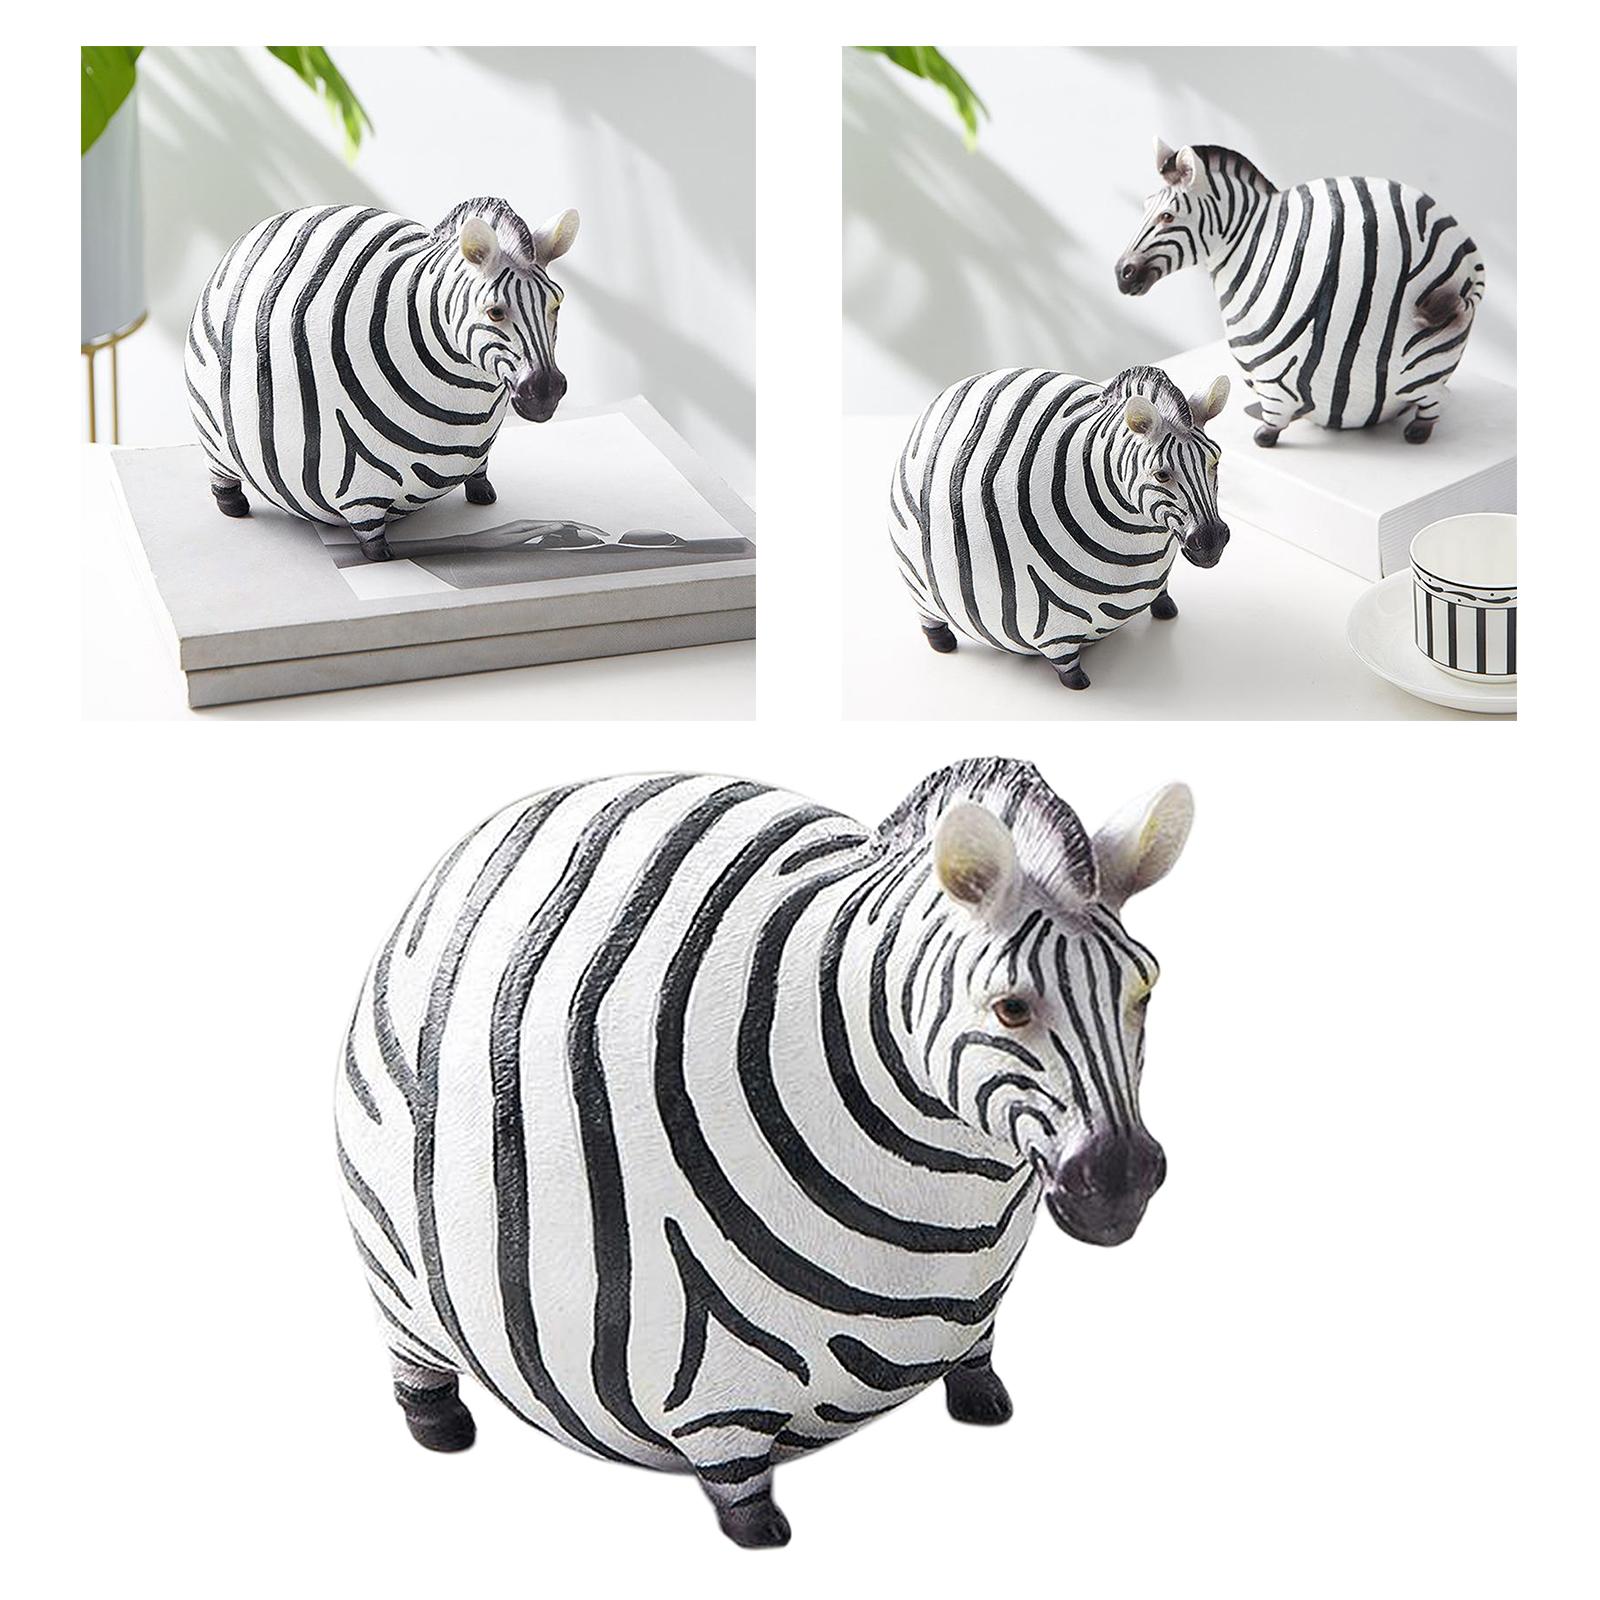 Cute Zebra Figurine Kids Toy Art Collectible Office Decoration Left Zebra